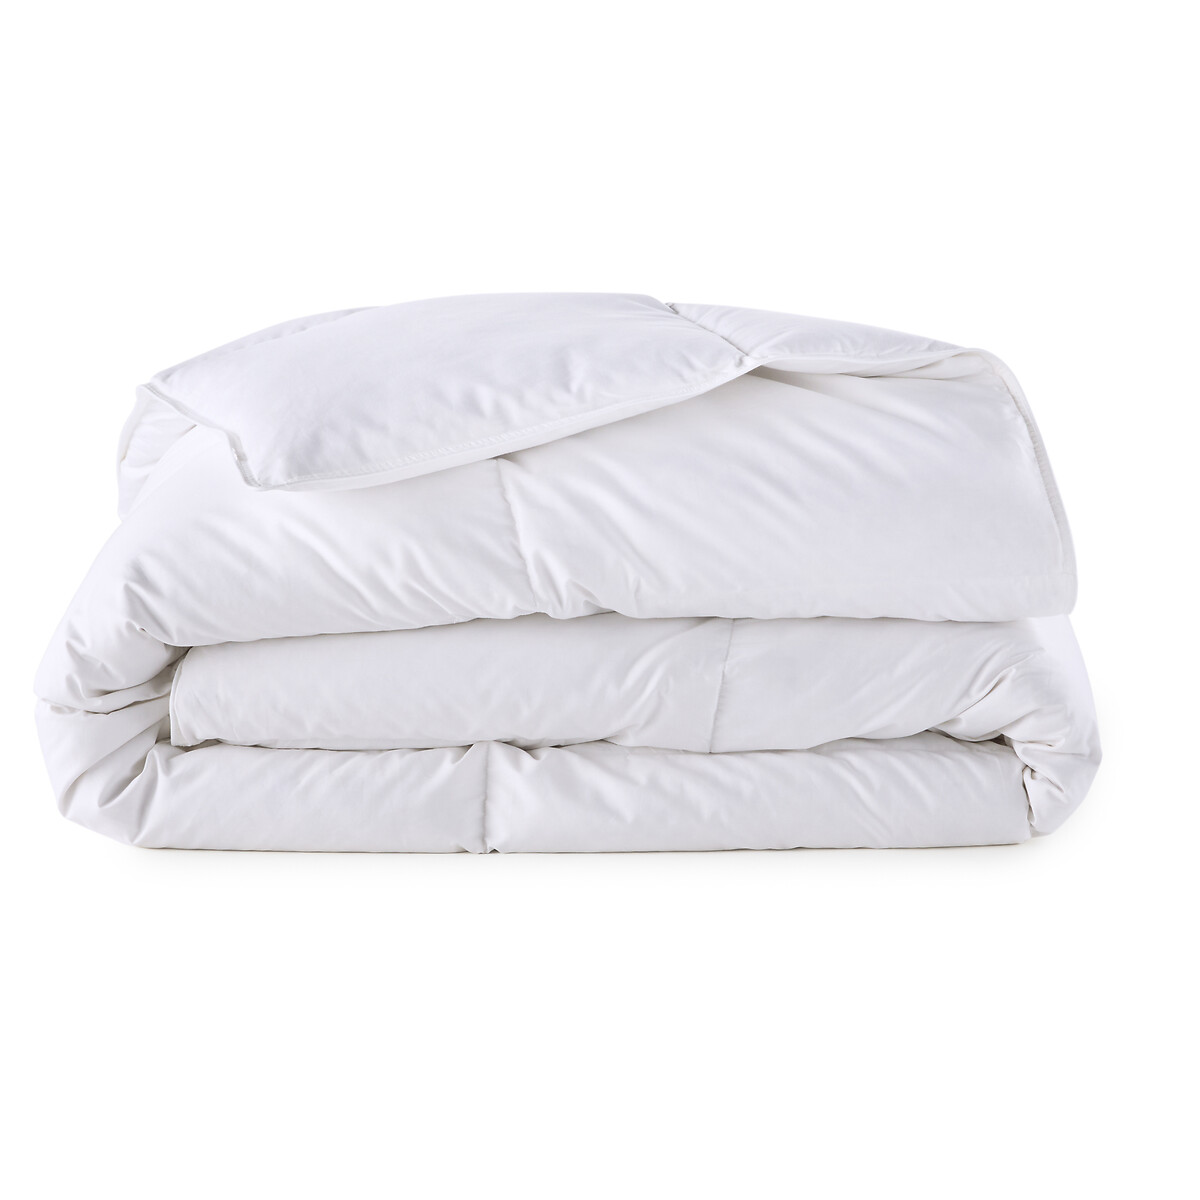 Одеяло La Redoute пуха  гм с обработкой Proneem 200 x 200 см белый, размер 200 x 200 см - фото 2